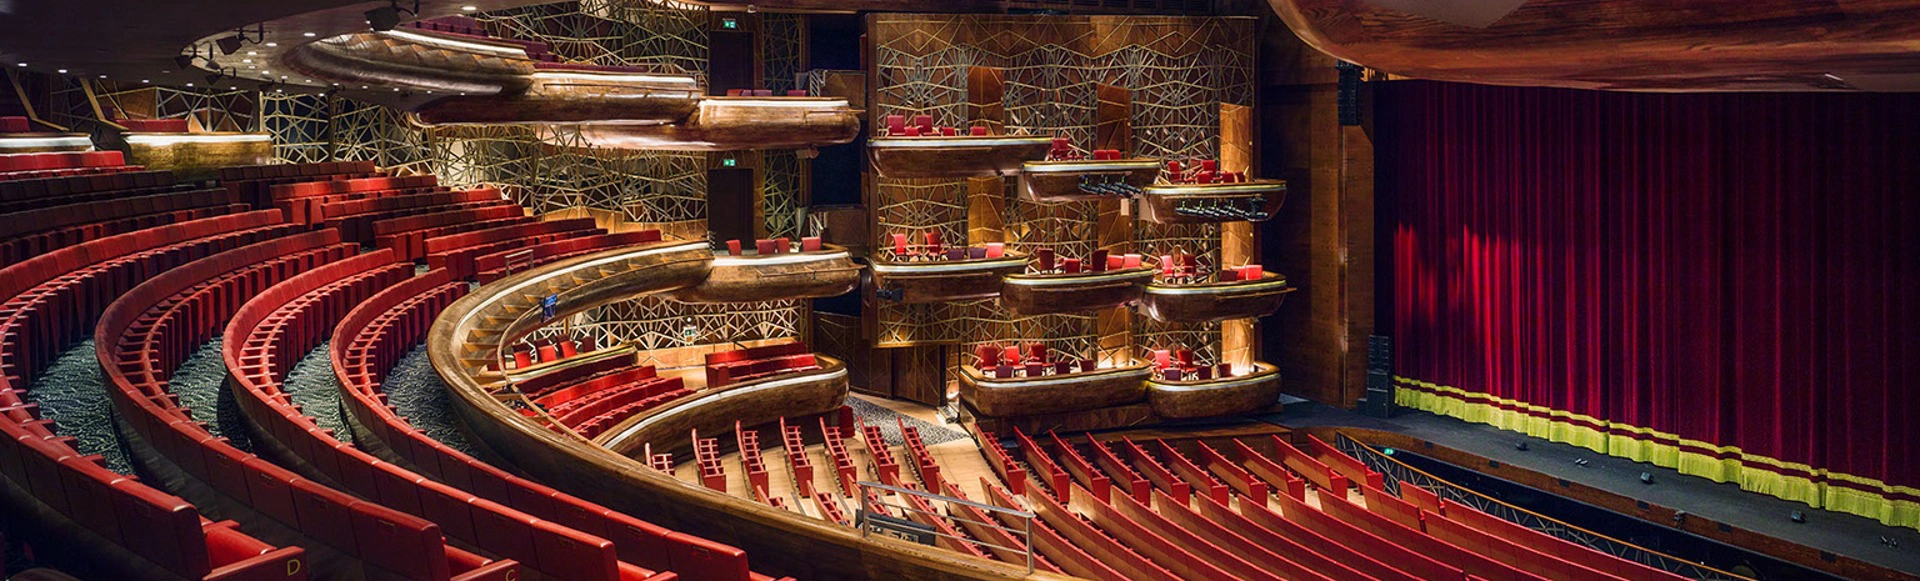 Dubai Opera Grand Tour